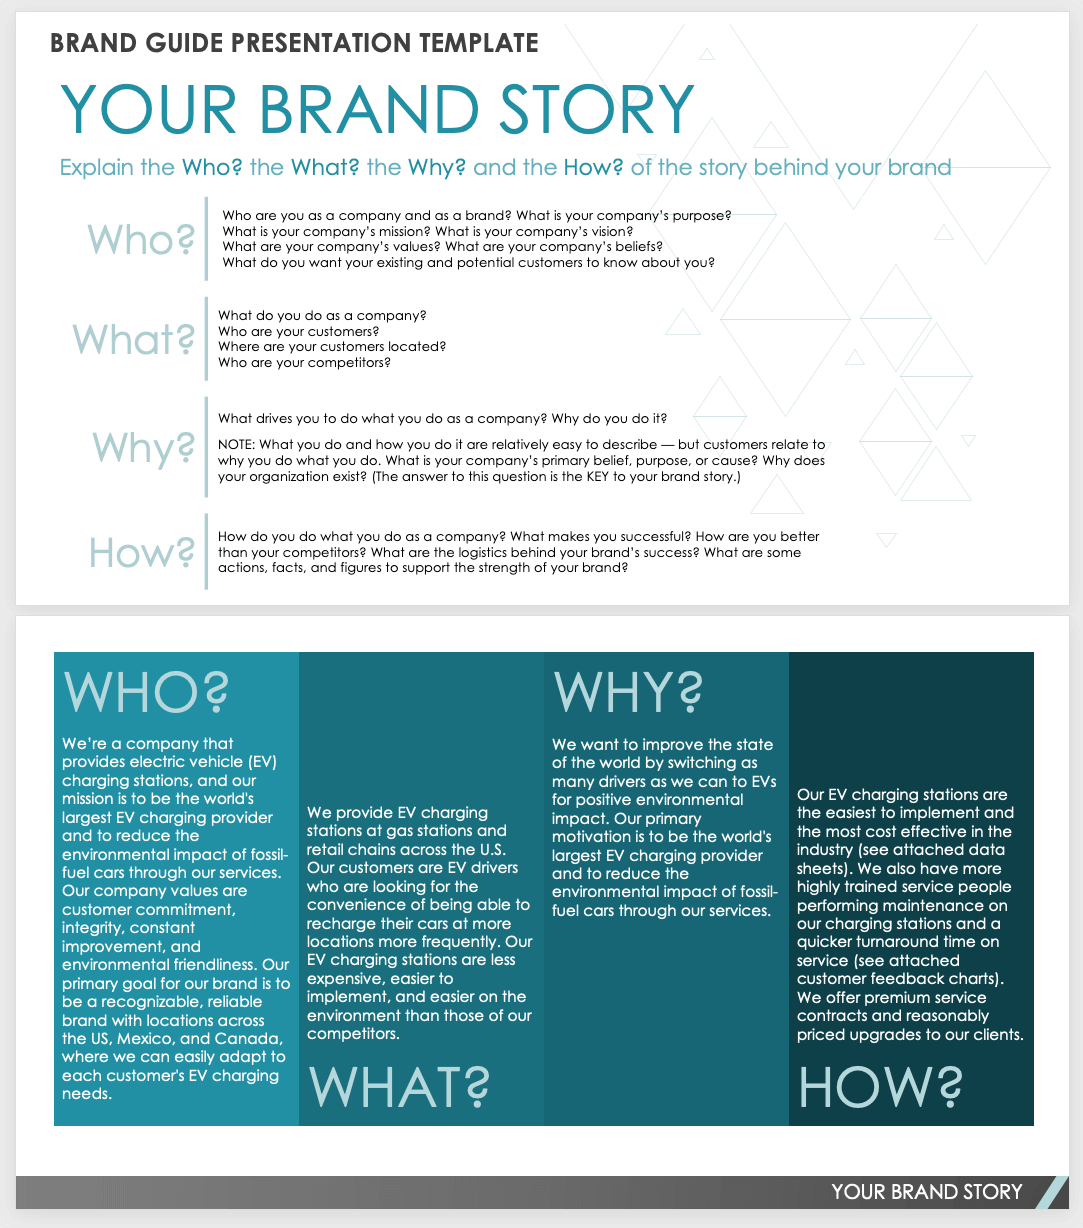 Brand Guide Presentation Template